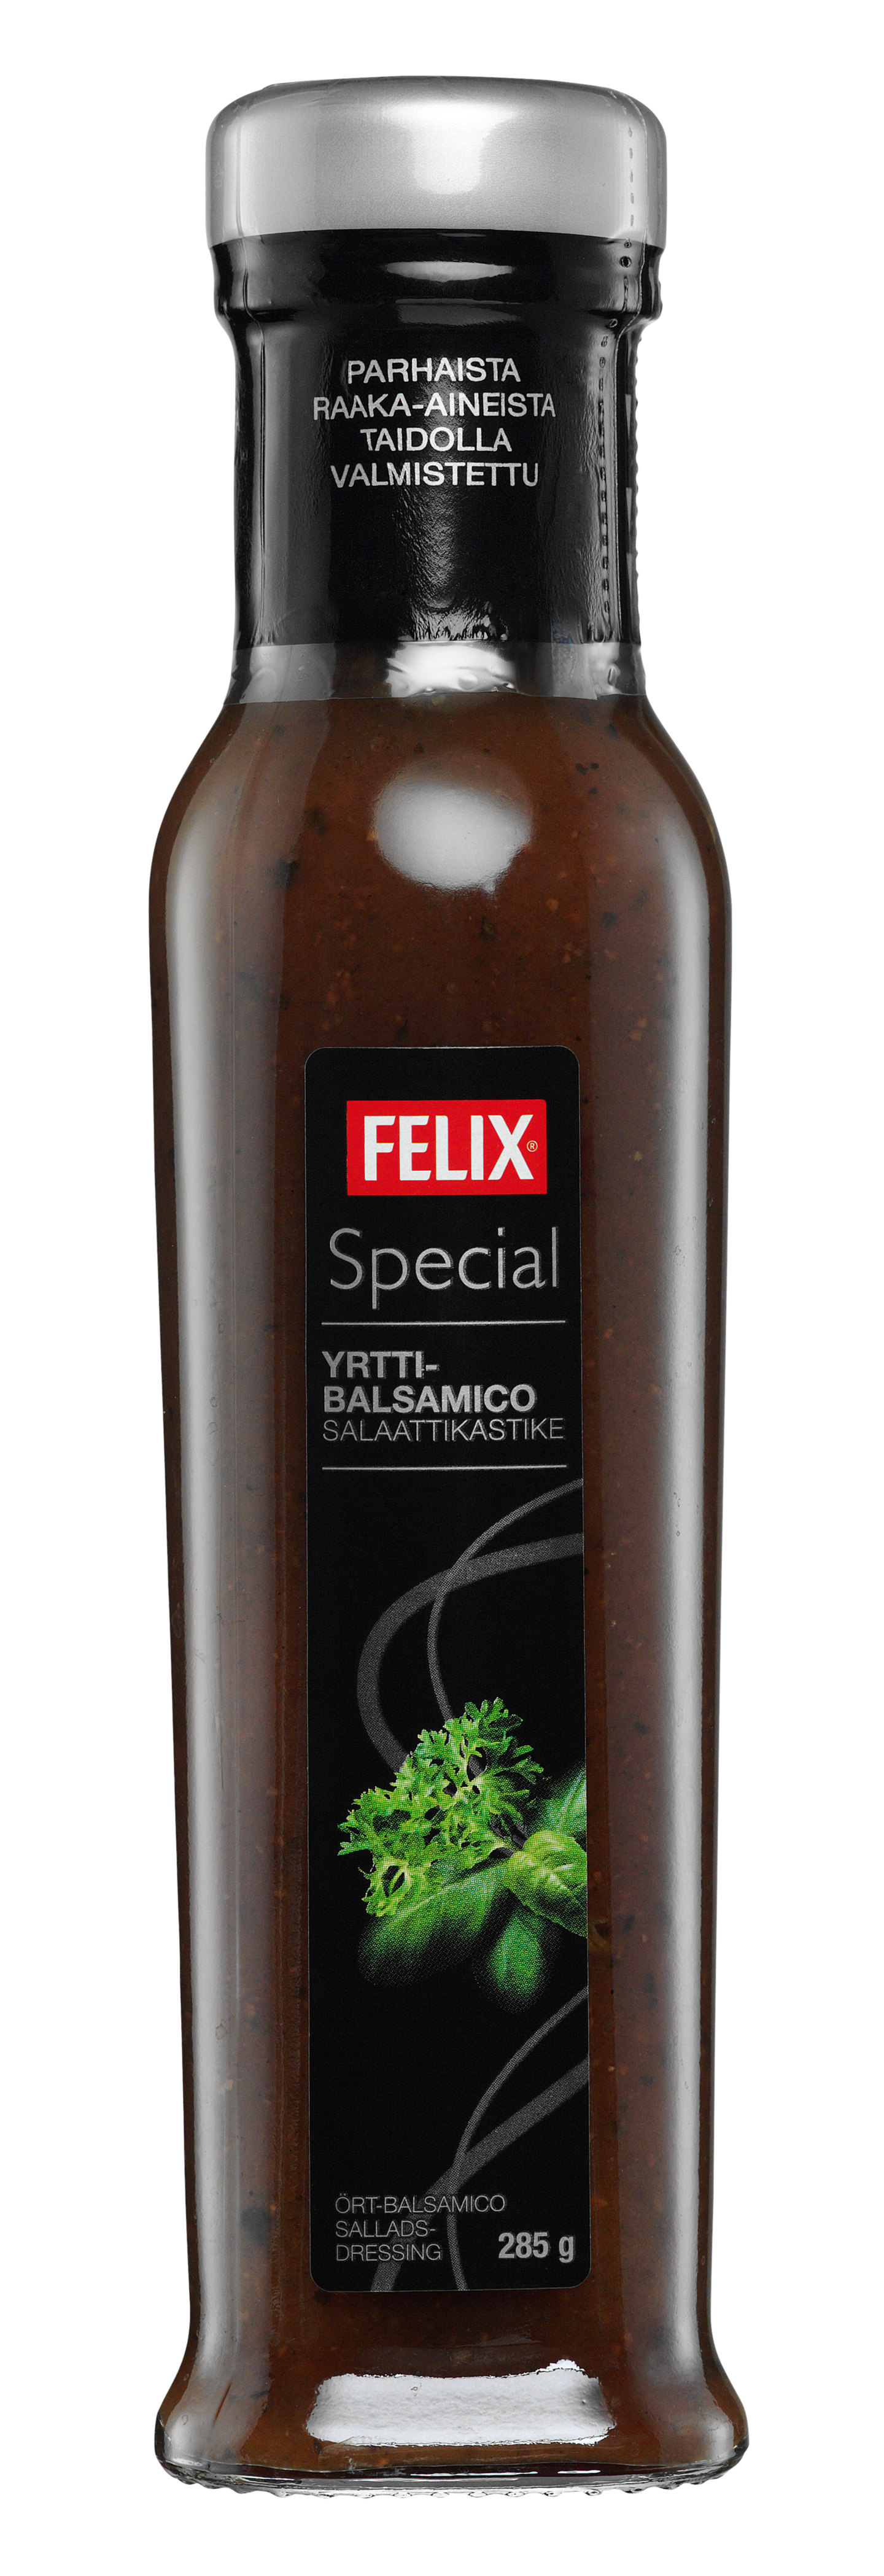 Felix Special Yrtti-Balsamico Salaattikastike 285 g